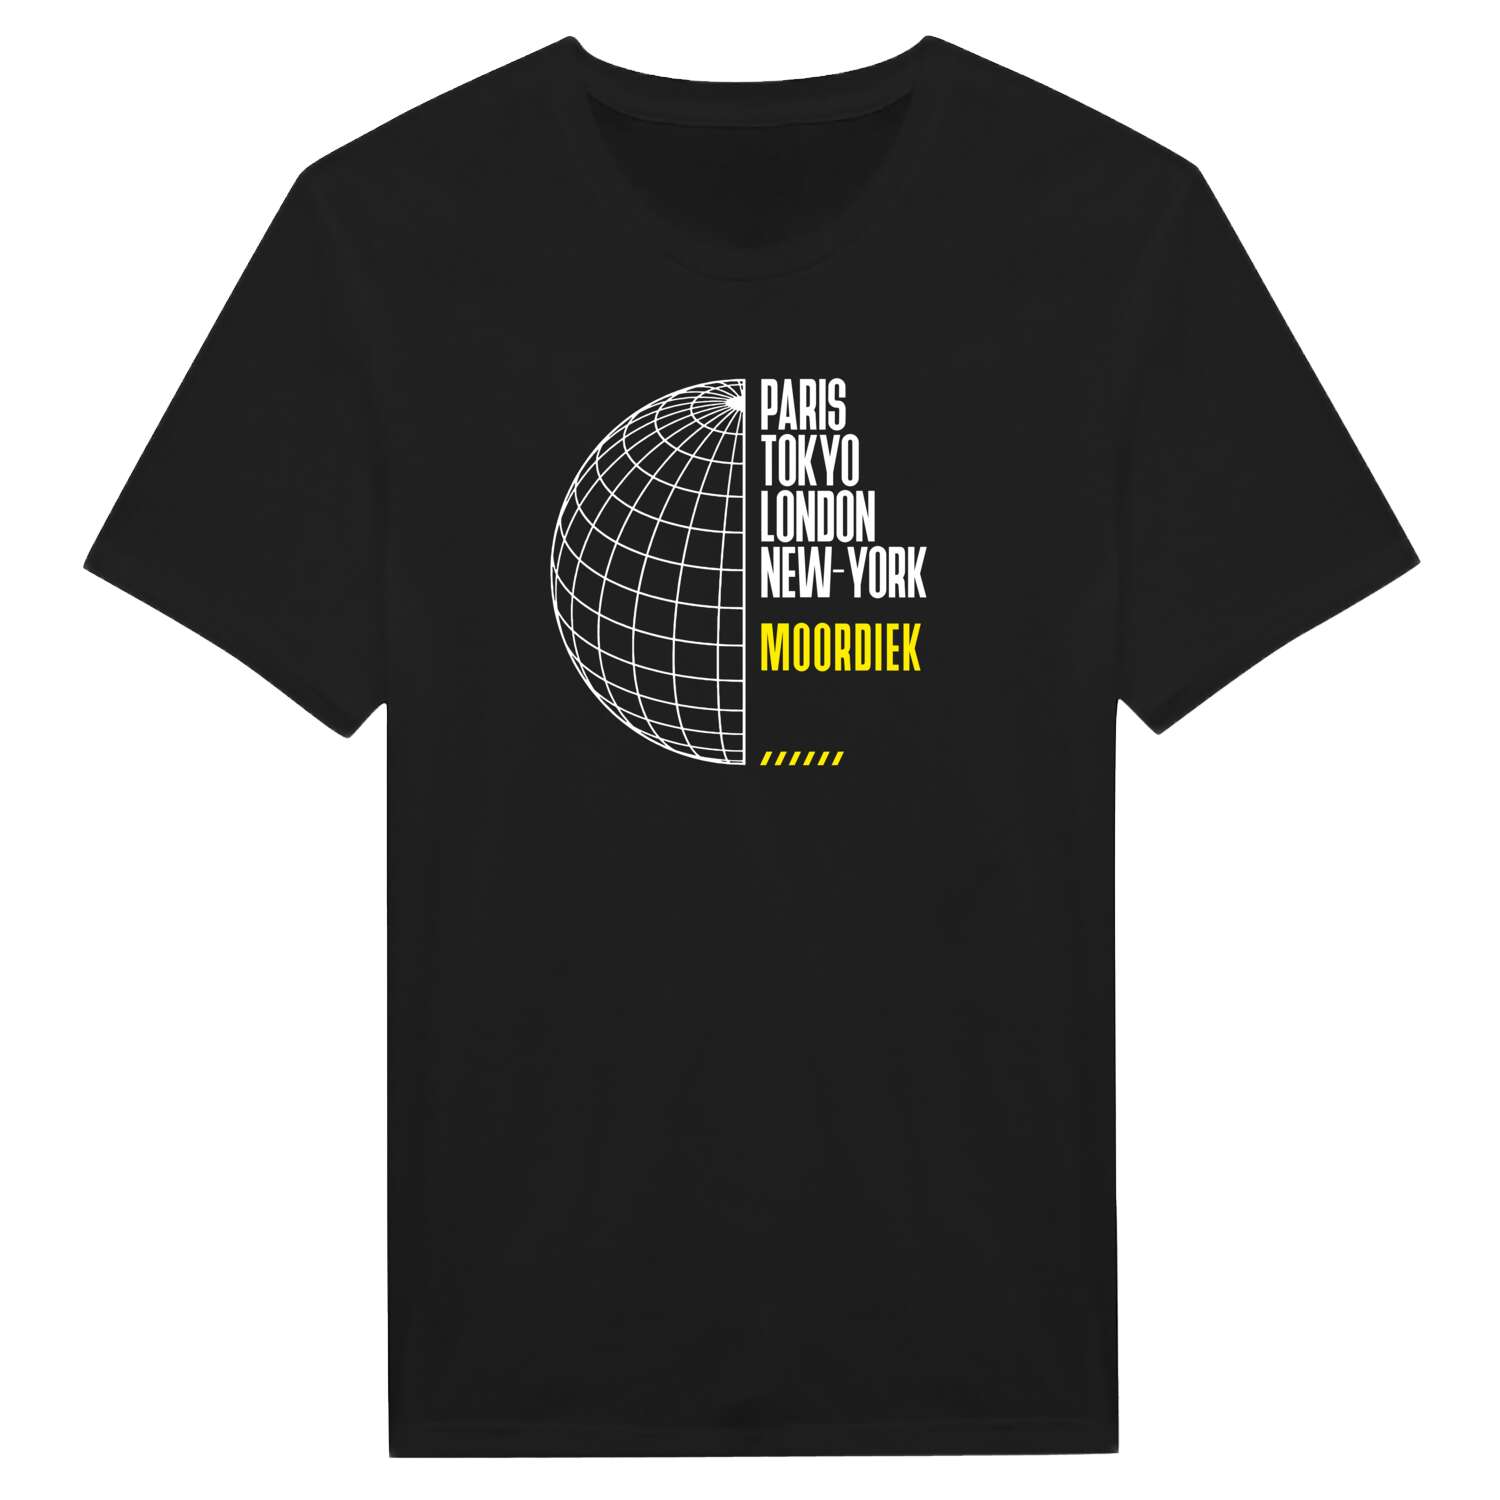 Moordiek T-Shirt »Paris Tokyo London«